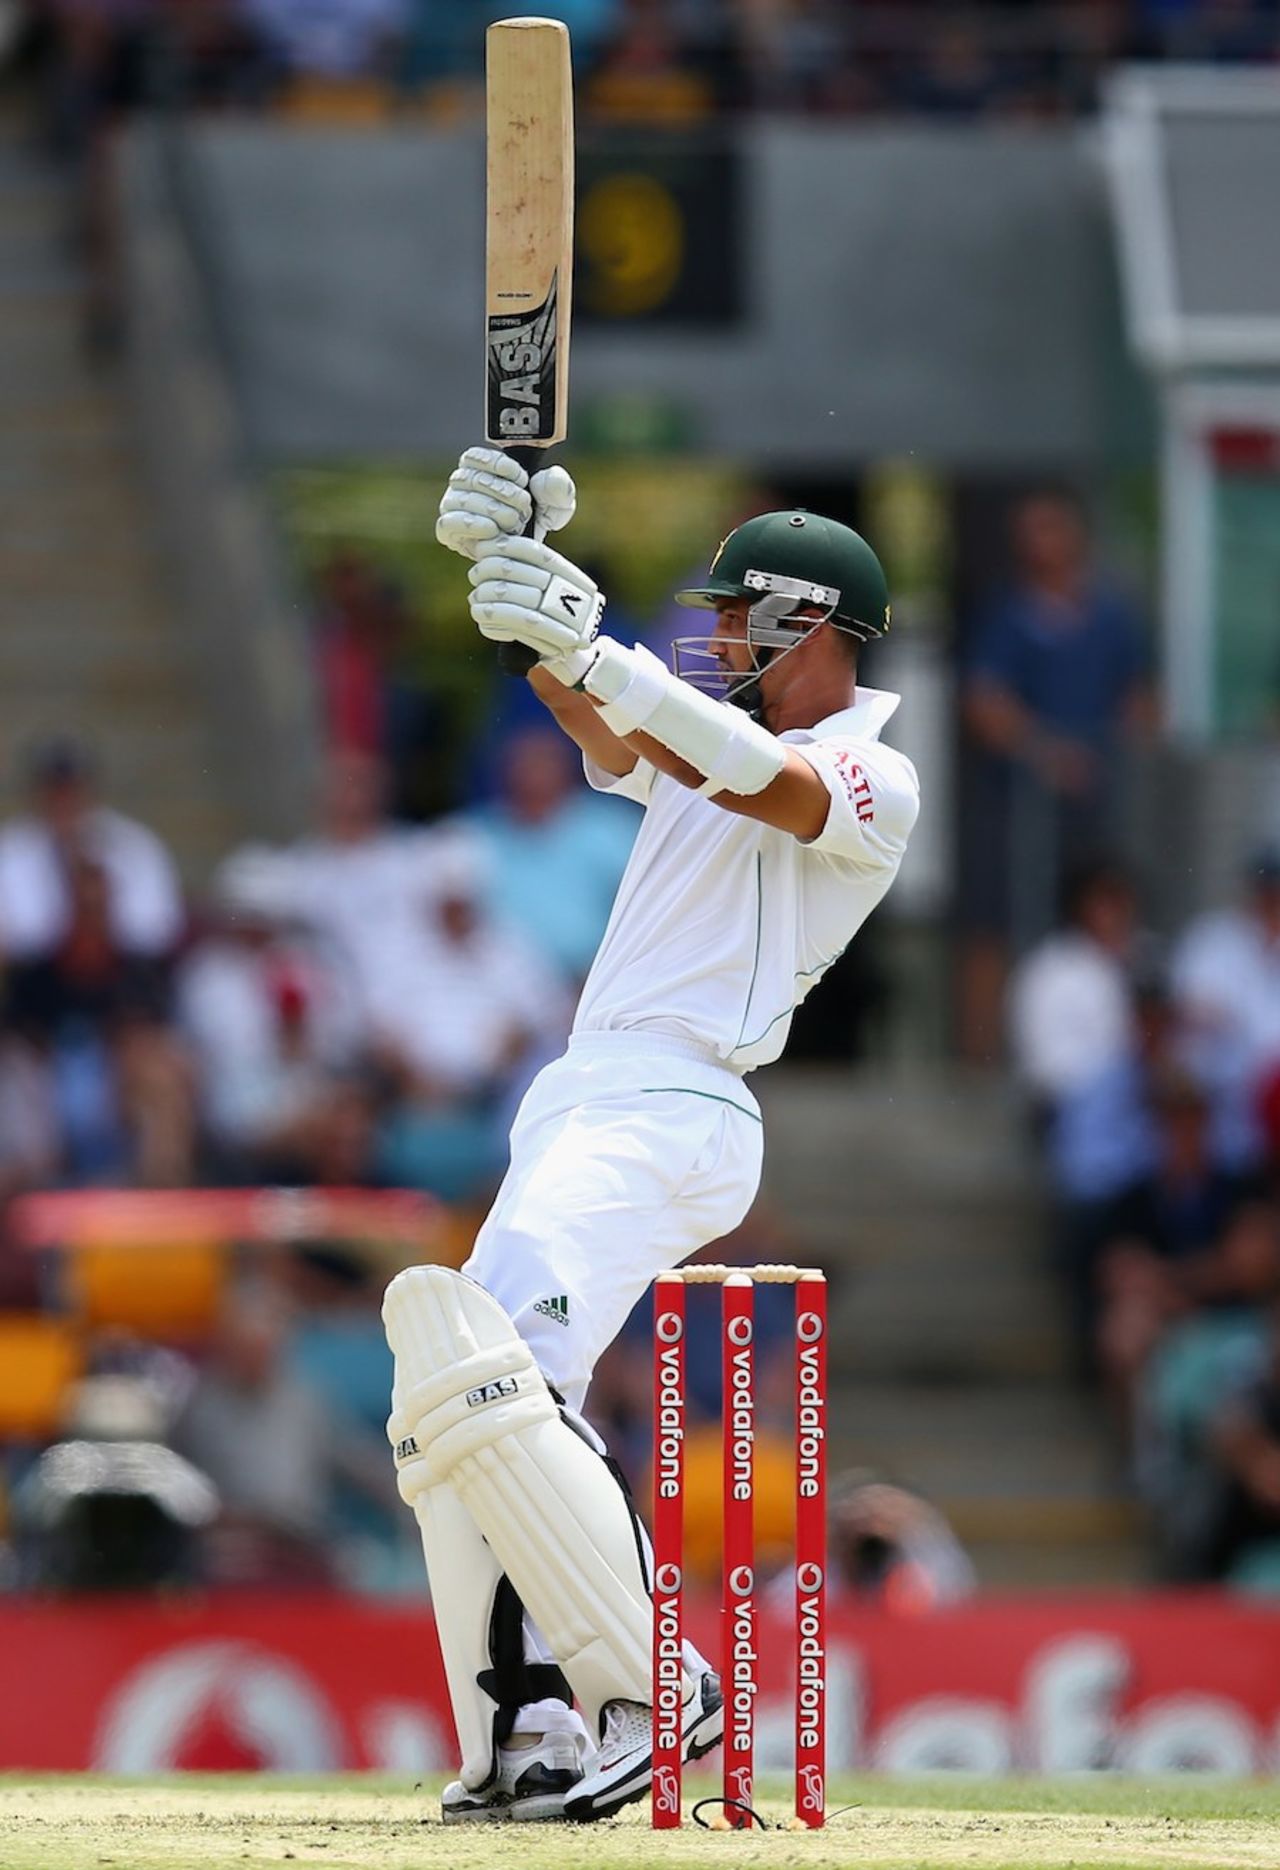 Alviro Petersen pulls during the first session, Australia v South Africa, 1st Test, Brisbane, 1st day, November 9, 2012